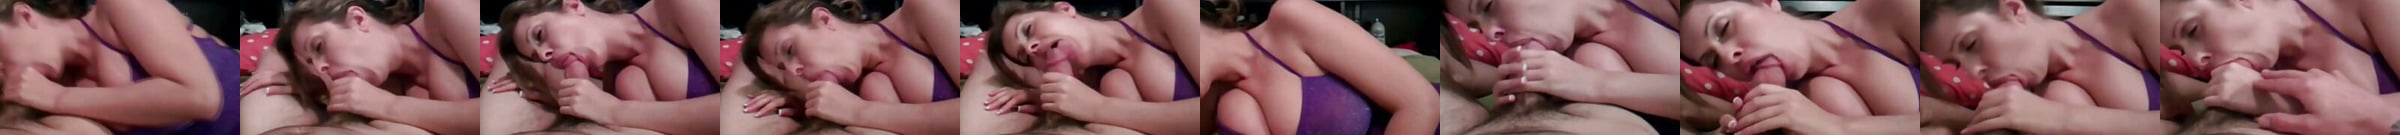 Vidéos Porno En Vedette Couple Sex Vidéos Porno Xhamster